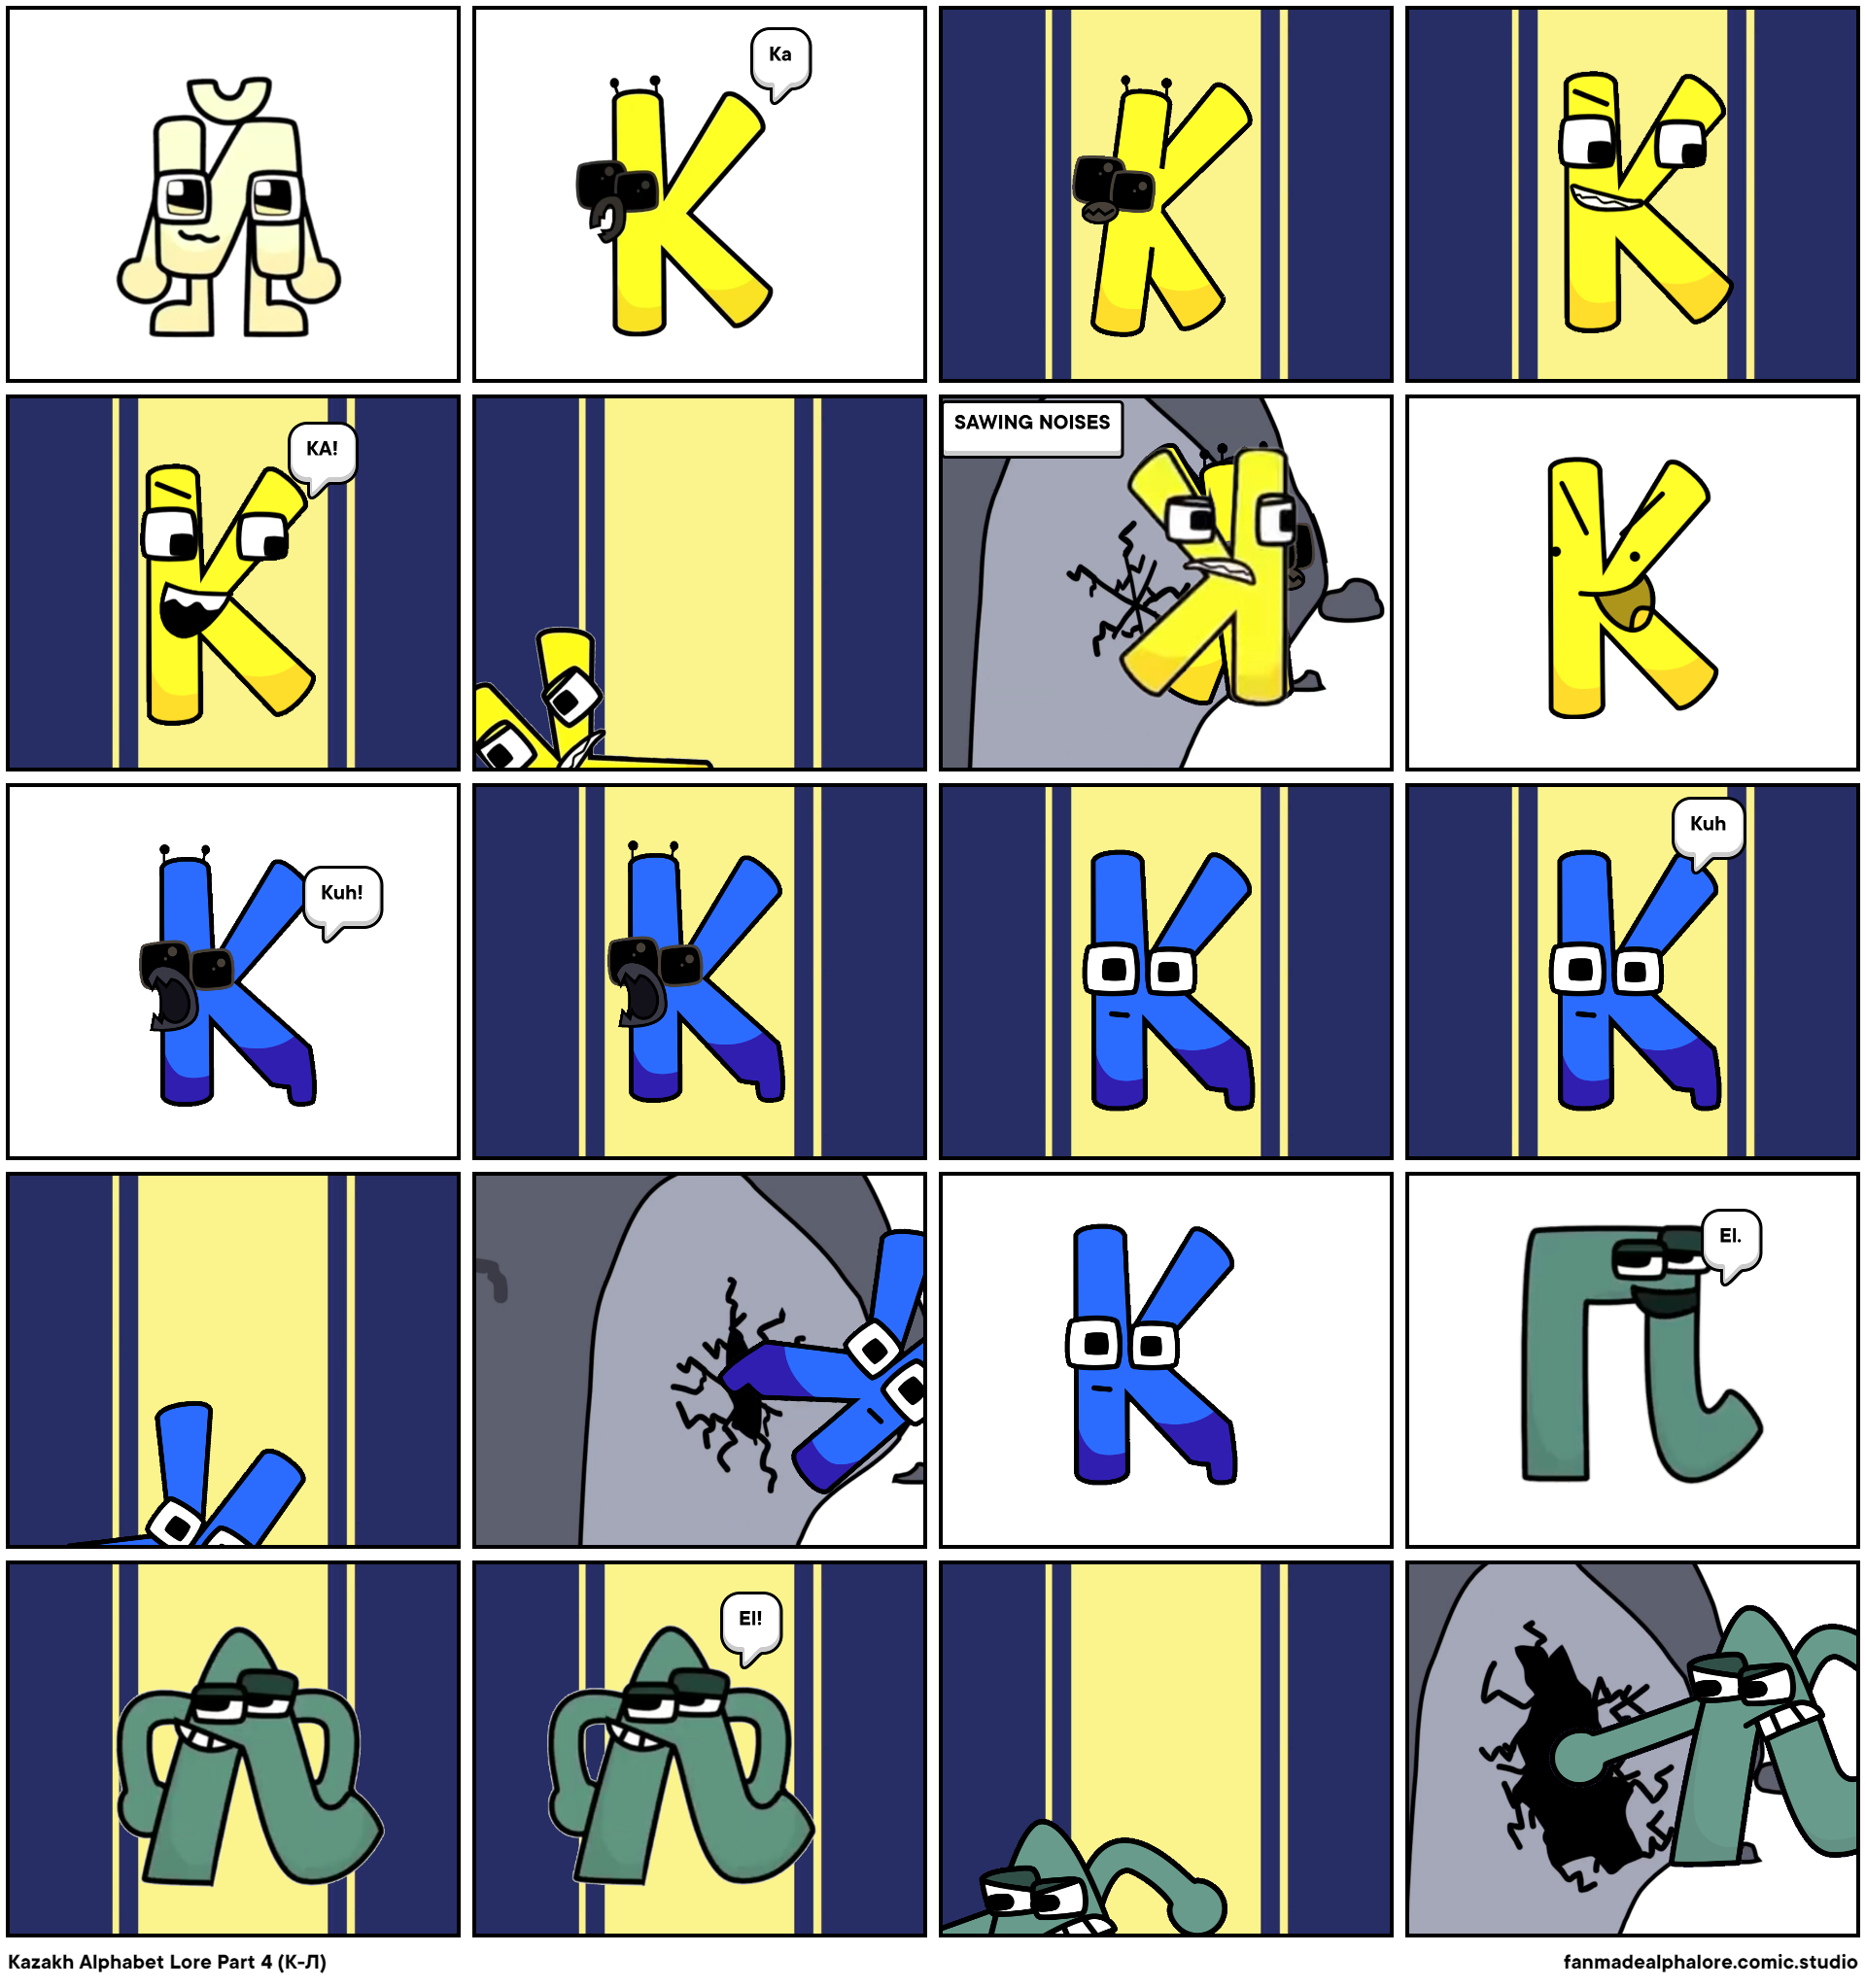 Kazakh Alphabet Lore Part 4 (K-Л) - Comic Studio